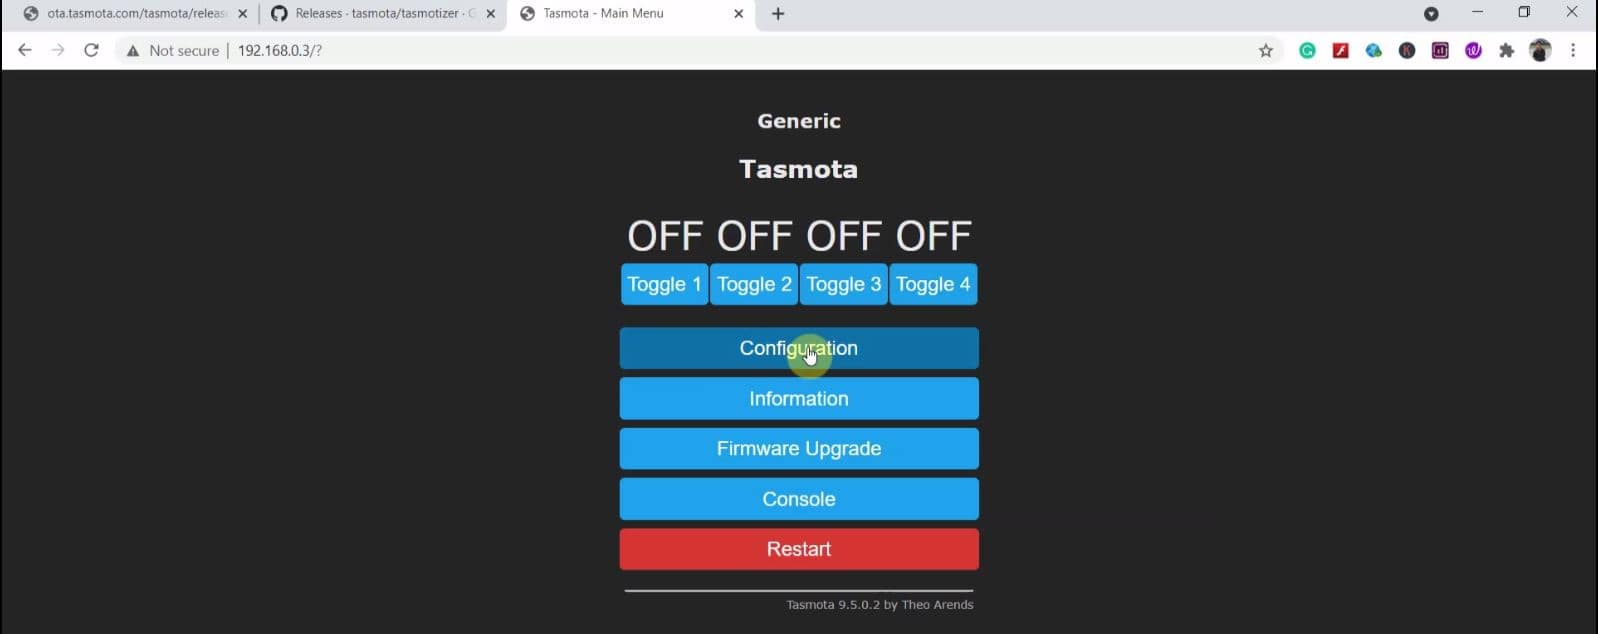 Tasmota Alexa integration steps 1